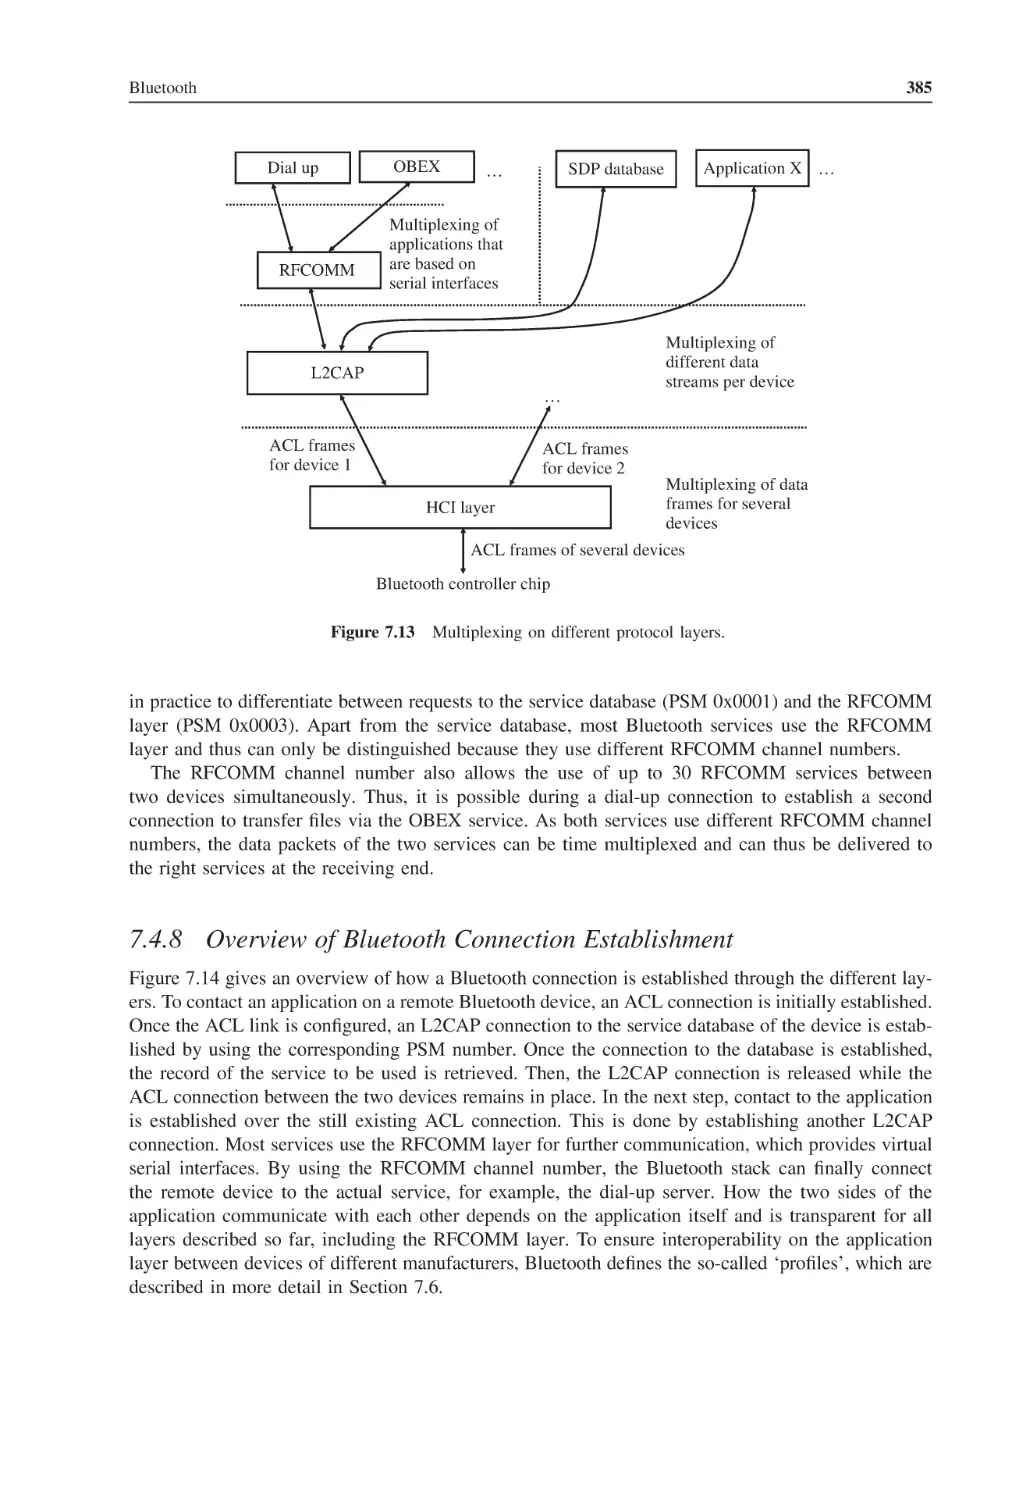 7.4.8 Overview of Bluetooth Connection Establishment